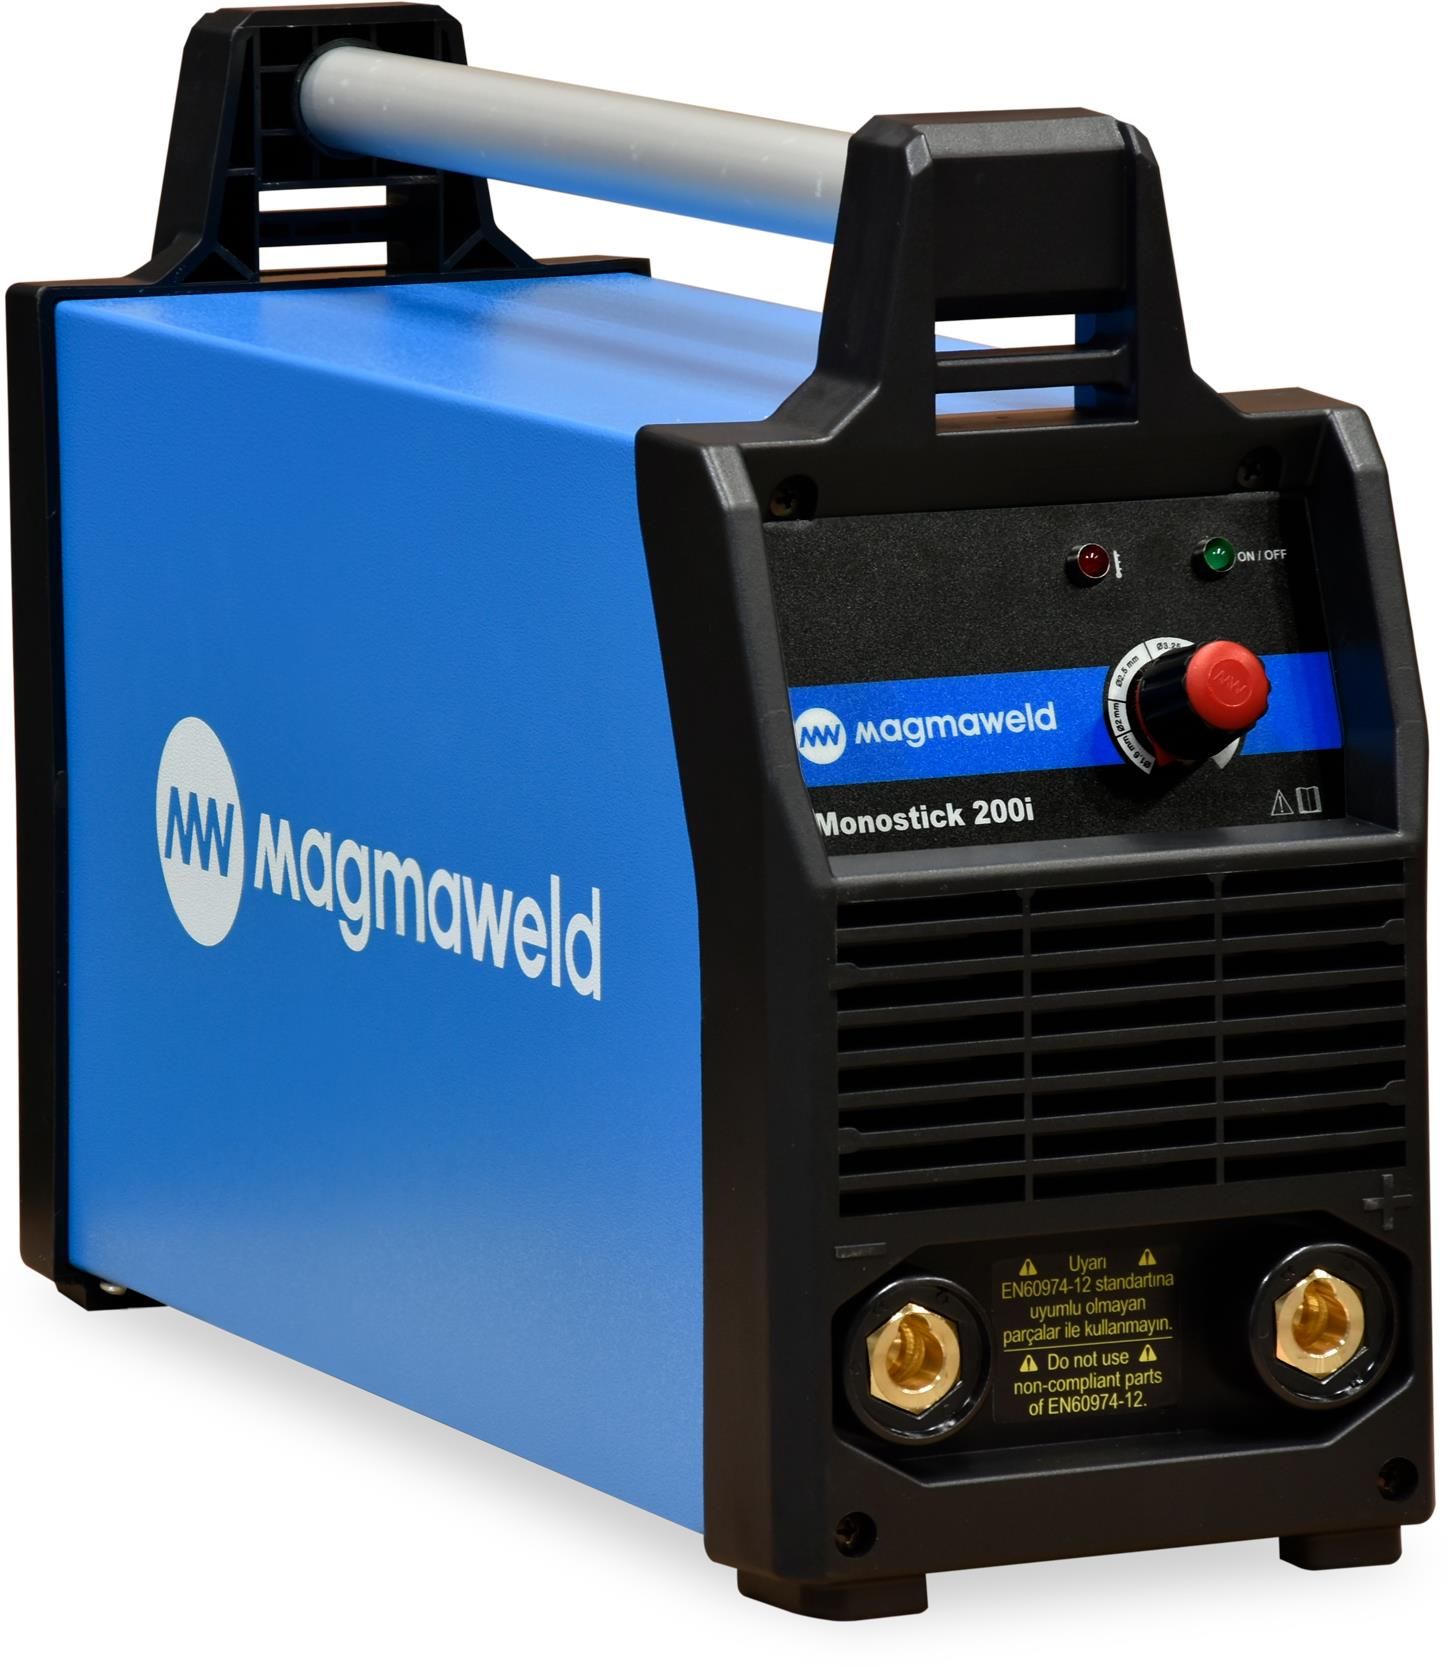 Magmaweld Monostick 200i Kaynak Makinası